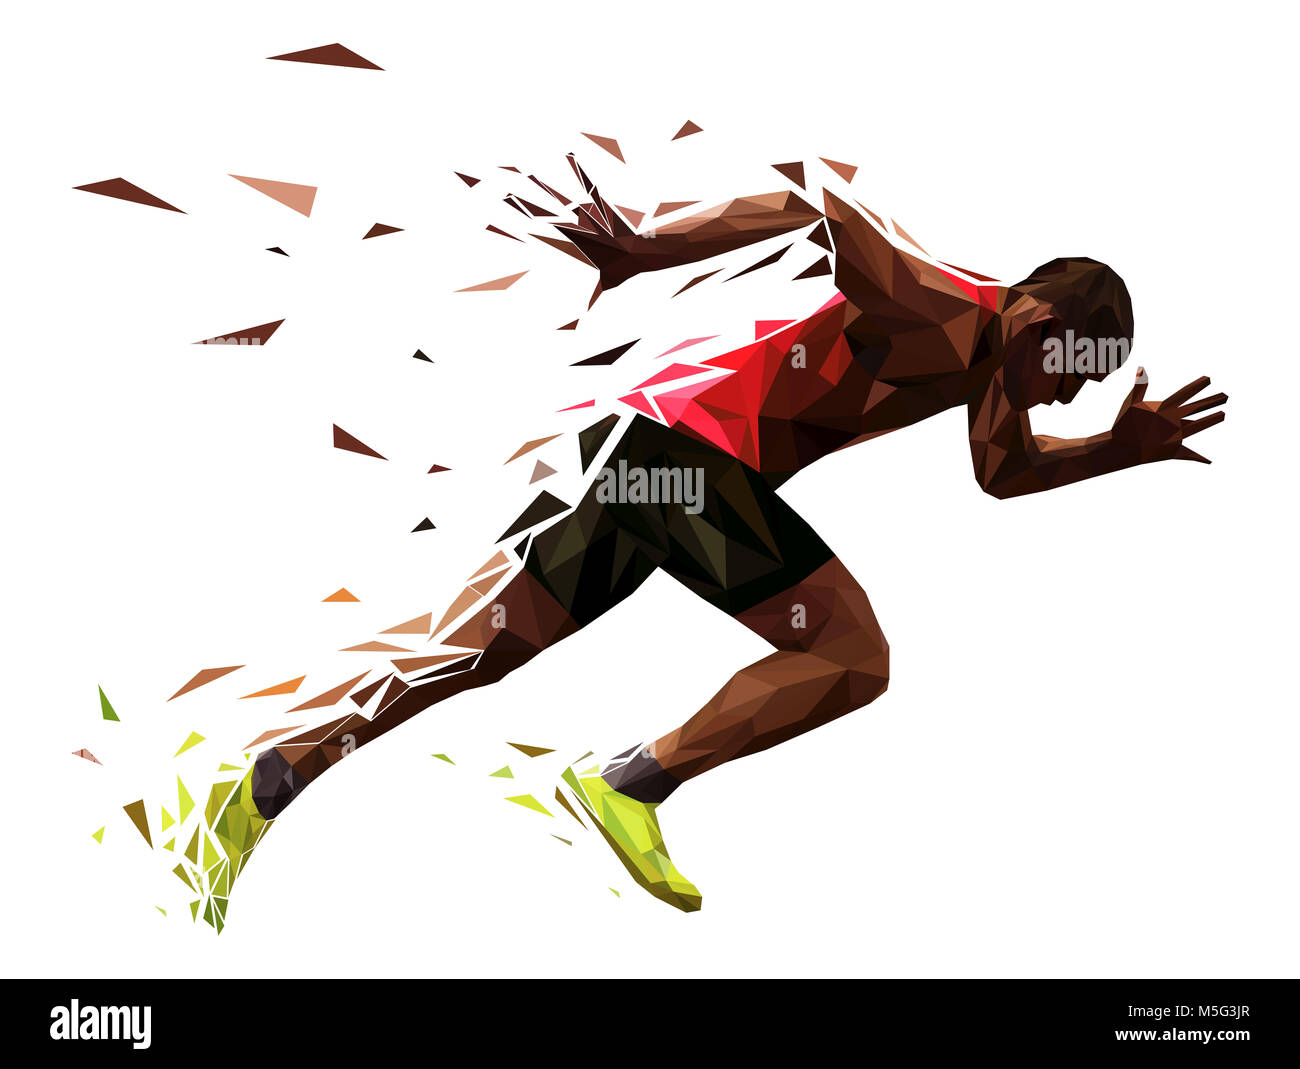 runner athlete sprint start explosive run vector illustration Stock Photo